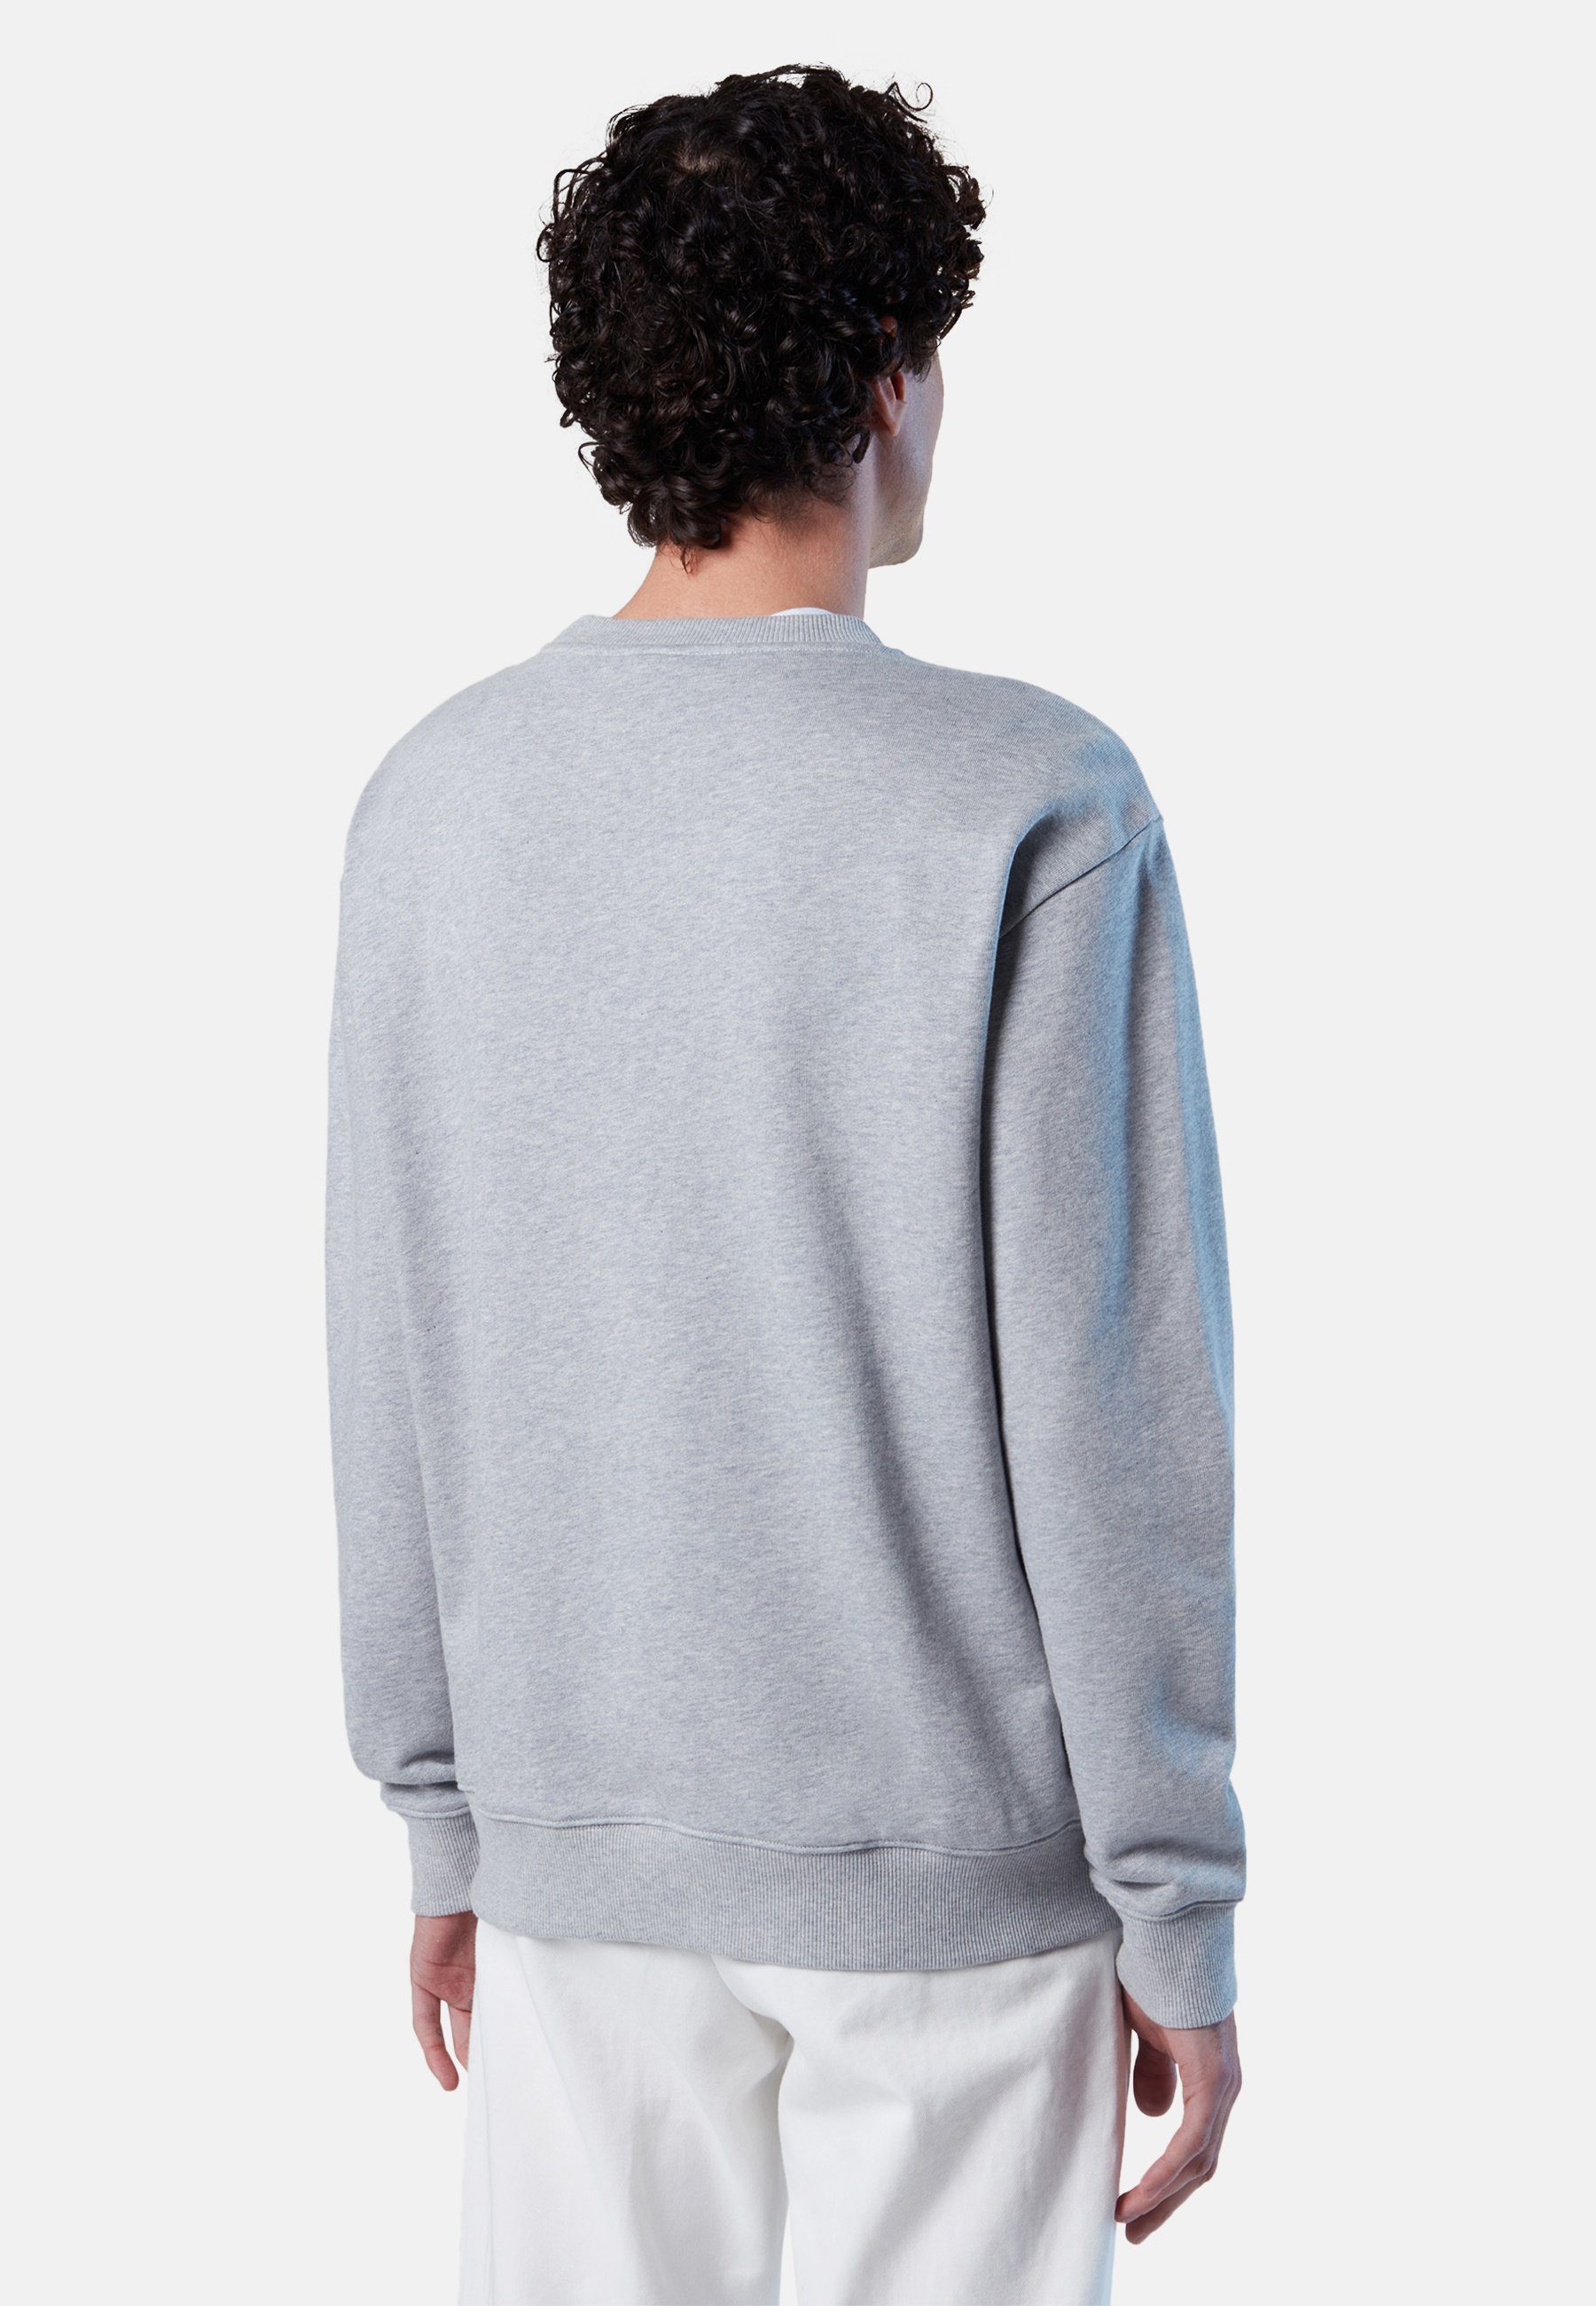 North Sails Brust-Print grey mit Sweatshirt Fleecepullover